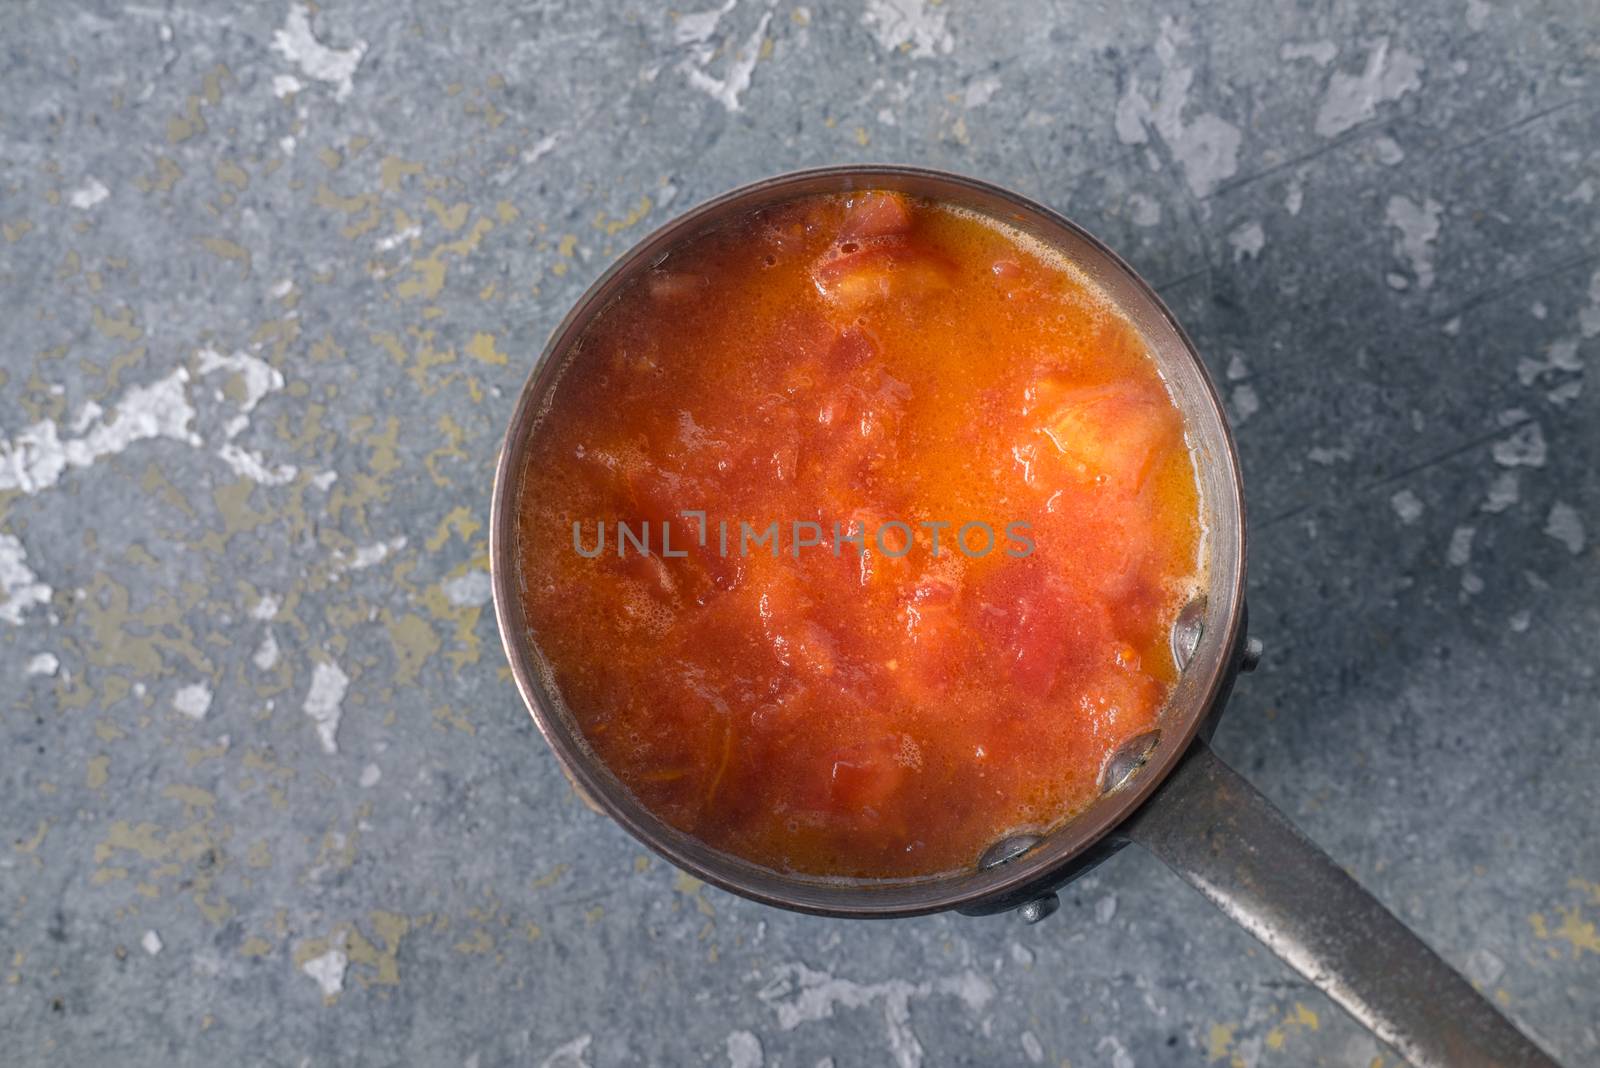 Sliced tomatoes on the metal pot by Deniskarpenkov